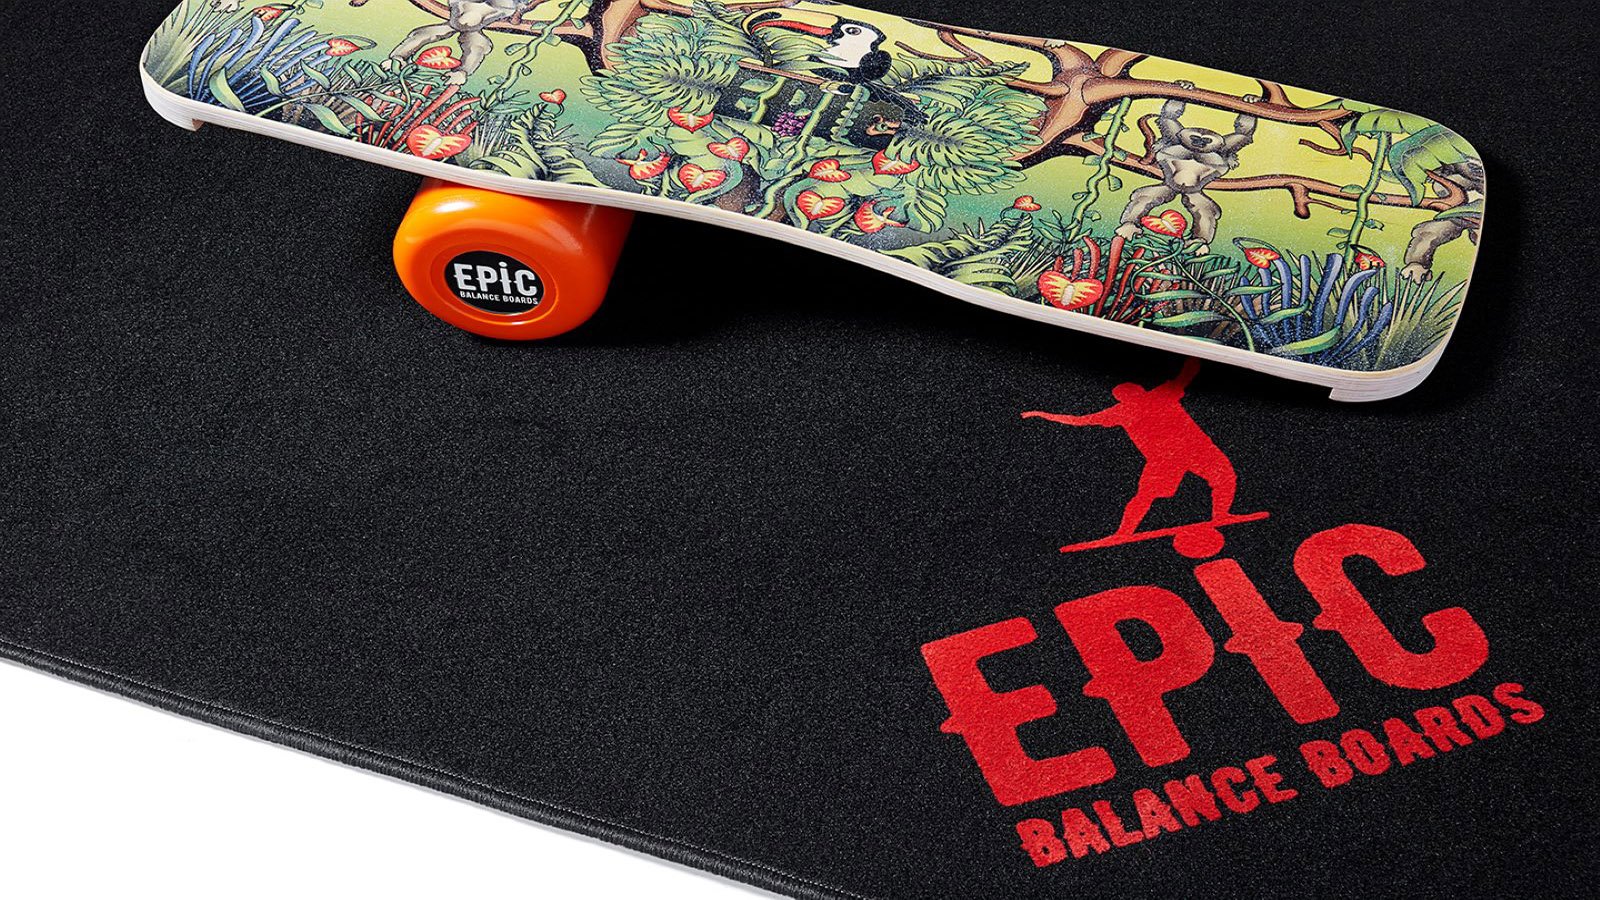 EPIC balance boards header